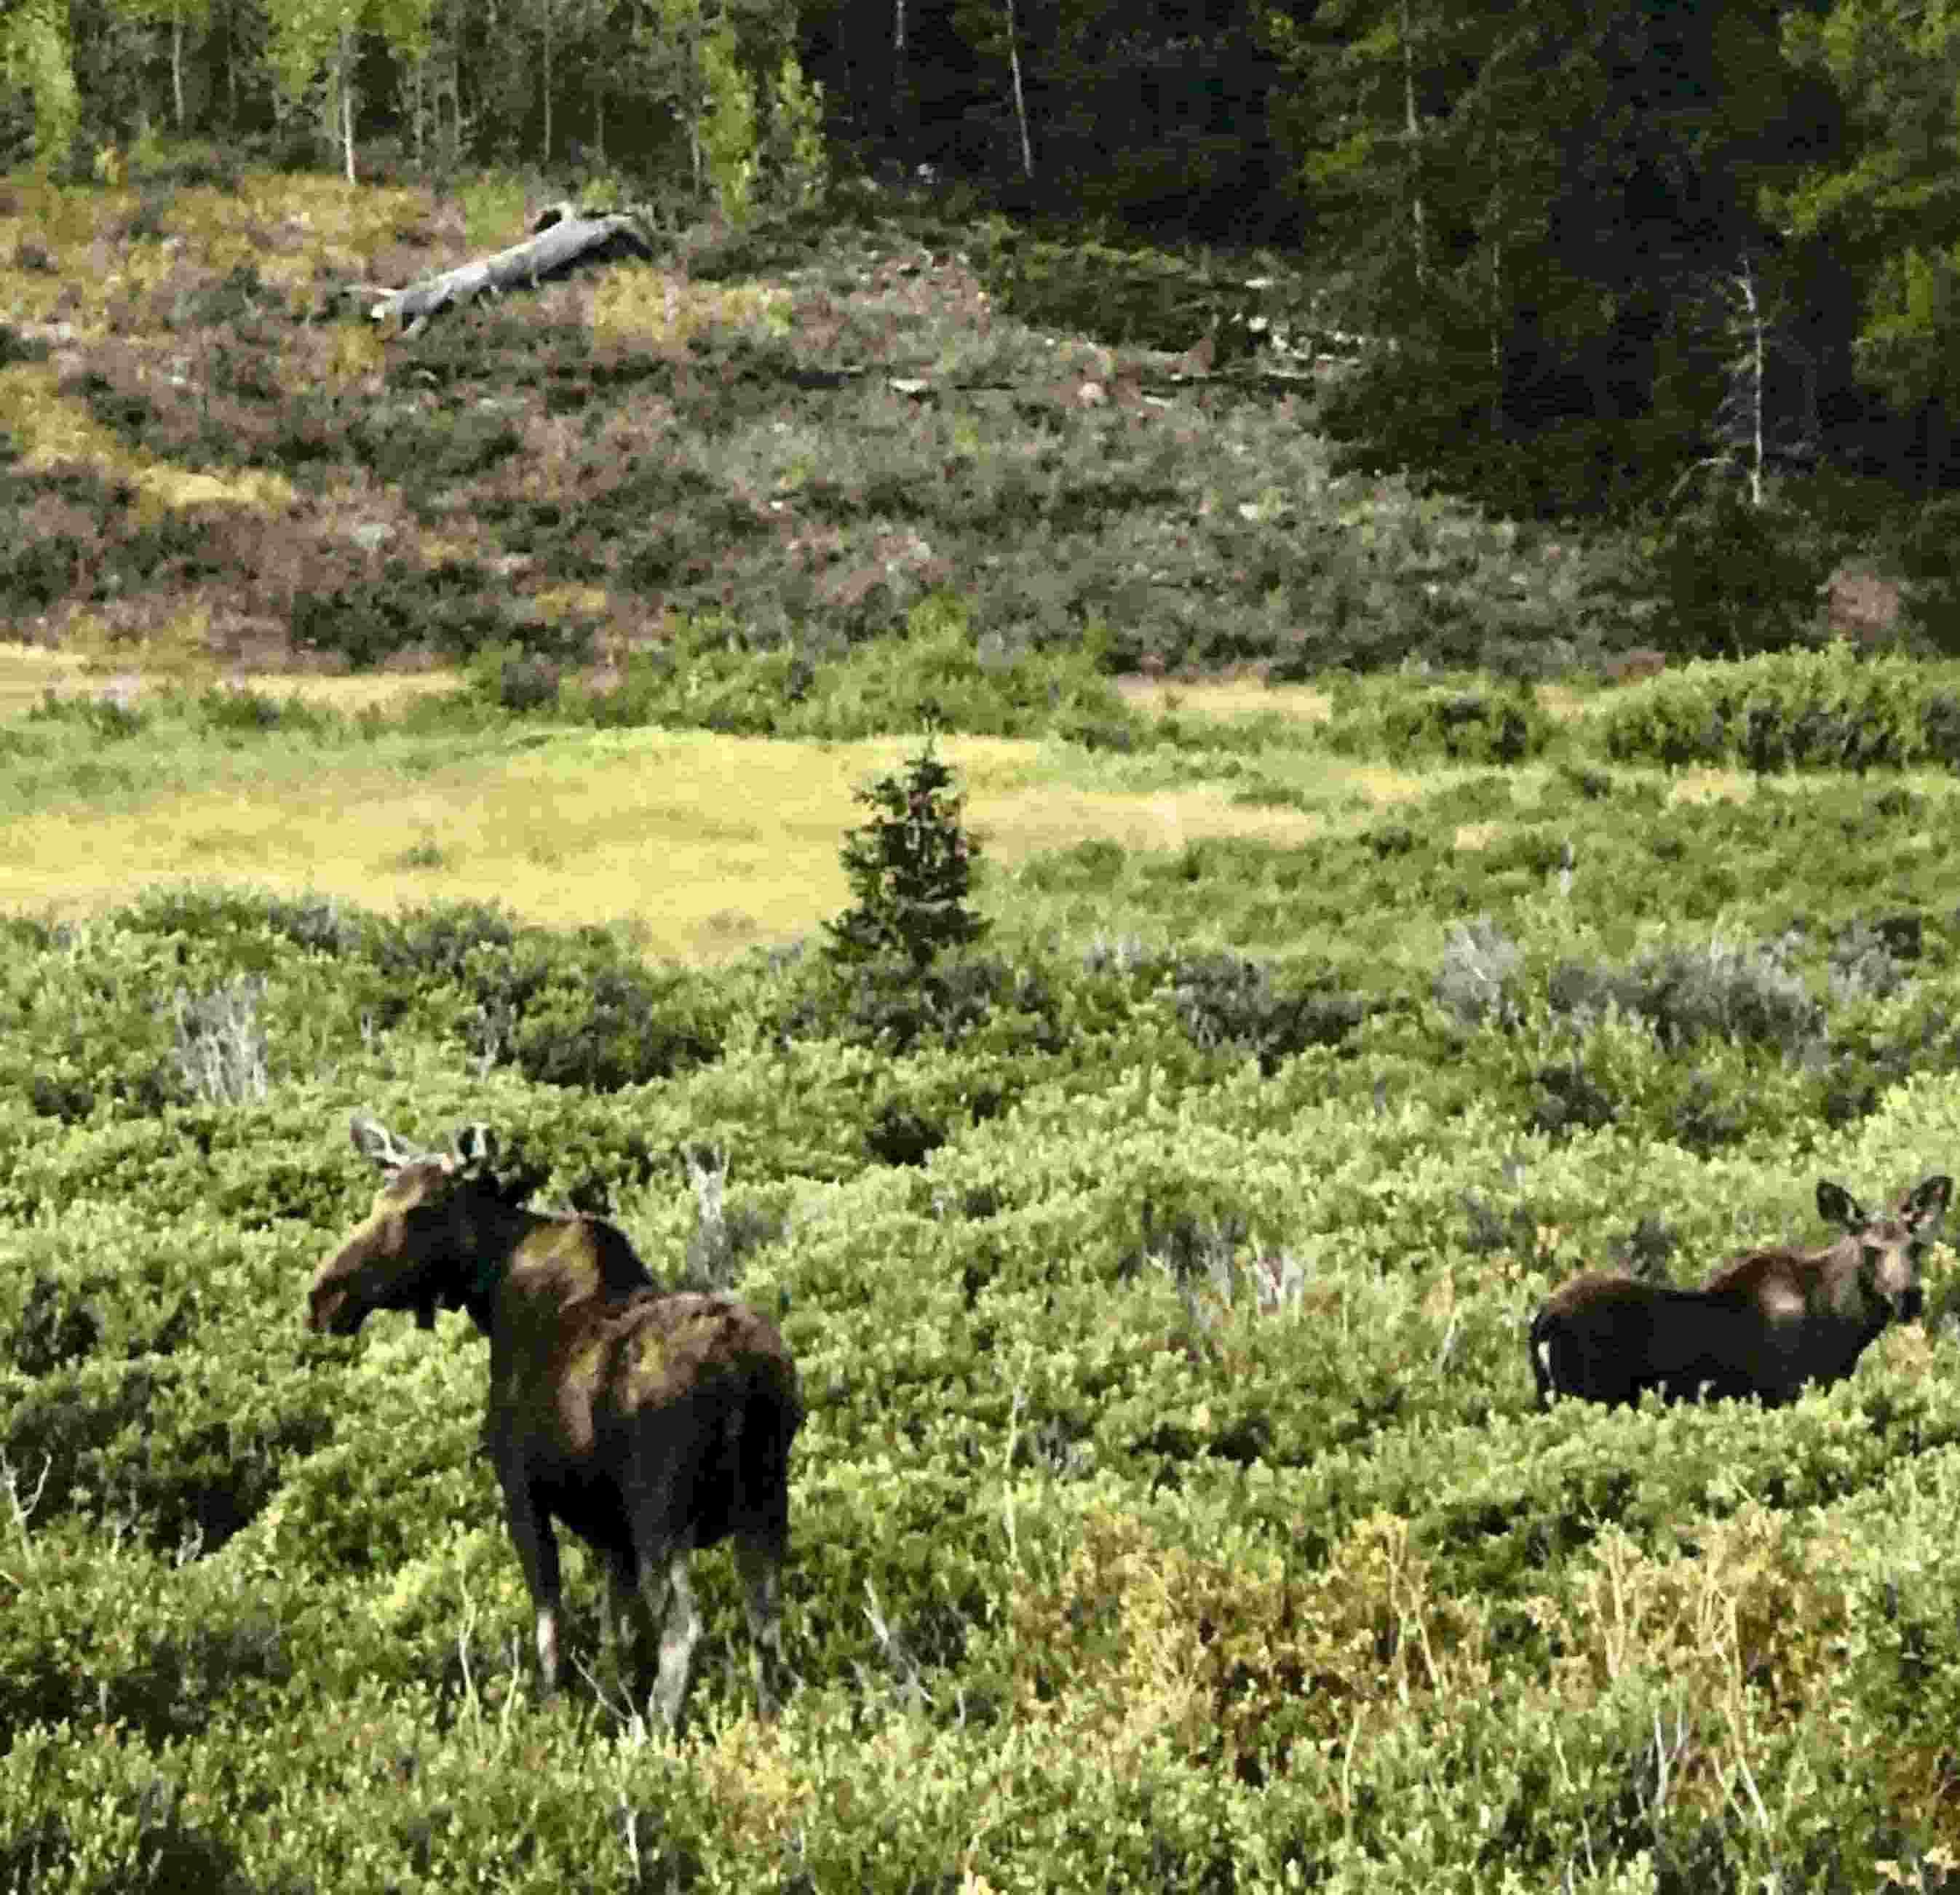 A moose in a green meadow